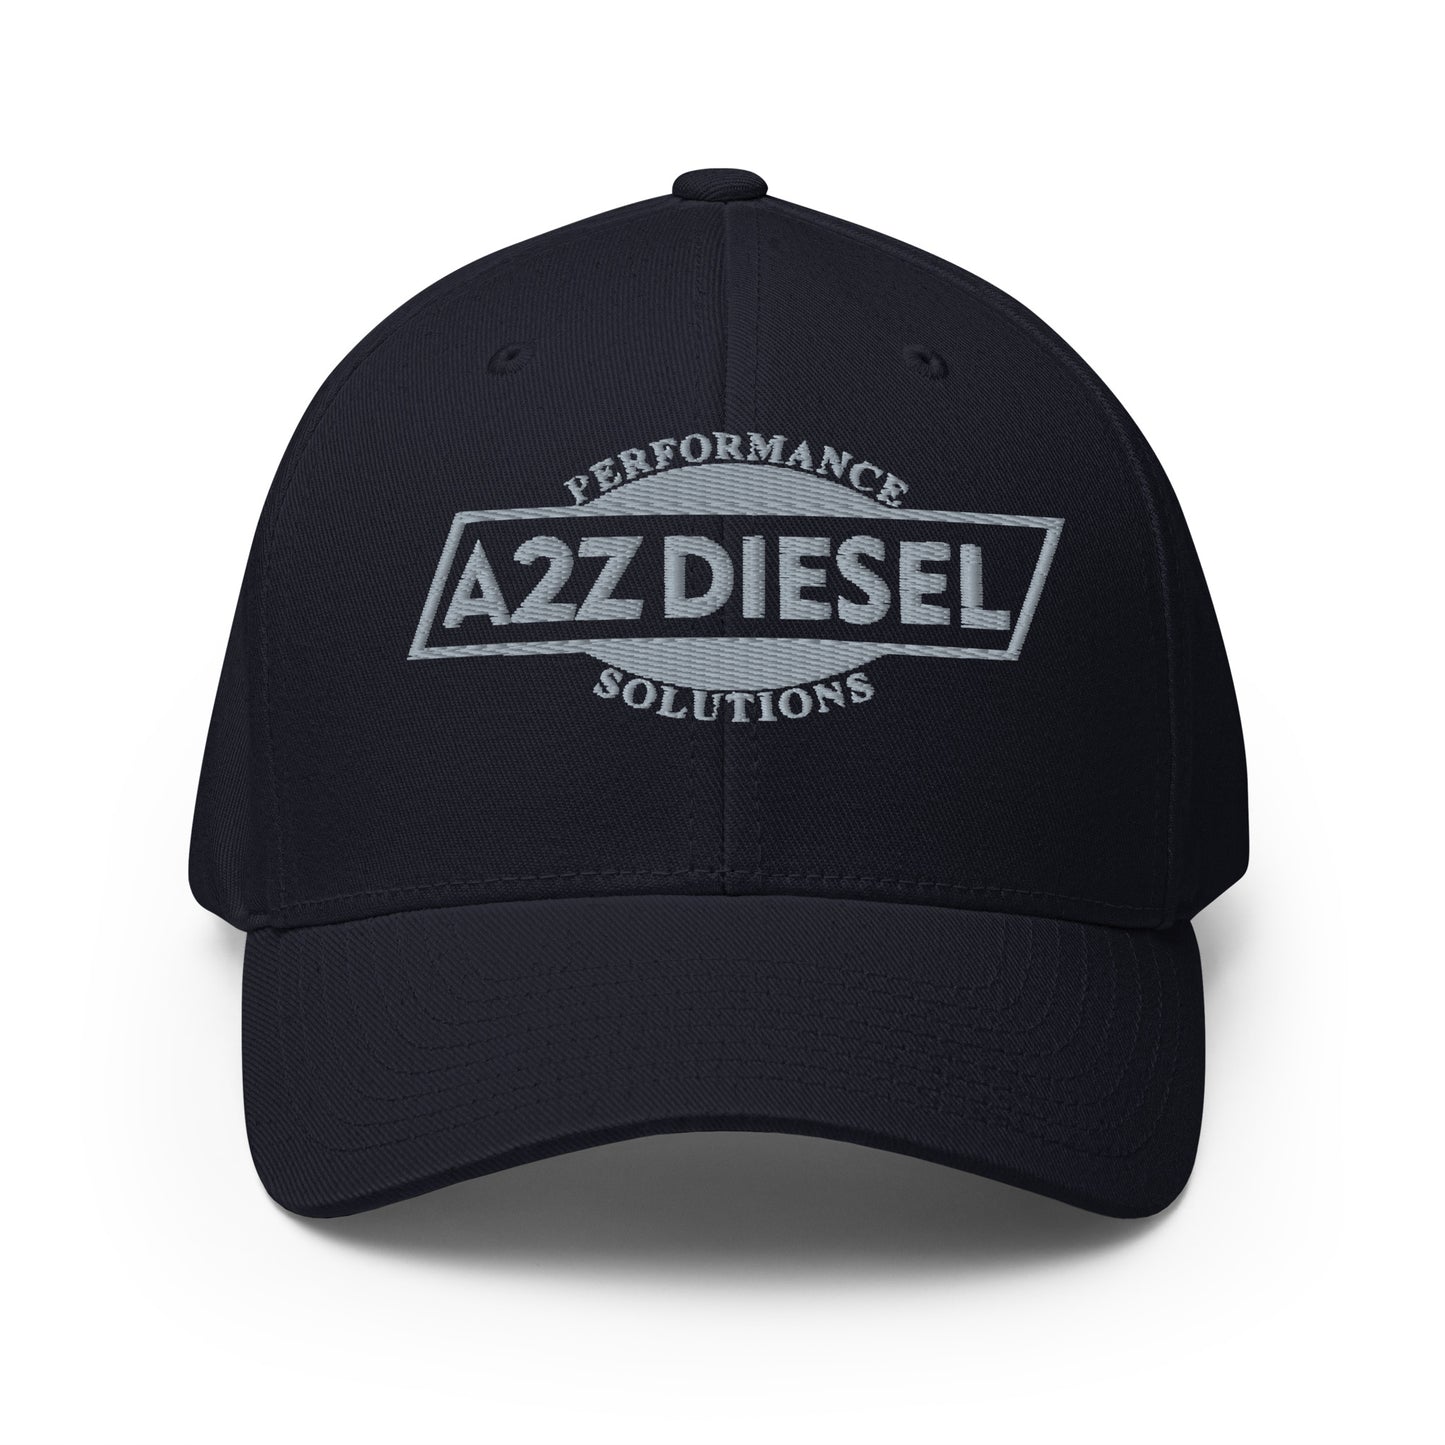 A2Z Diesel FlexFit Baseball Cap